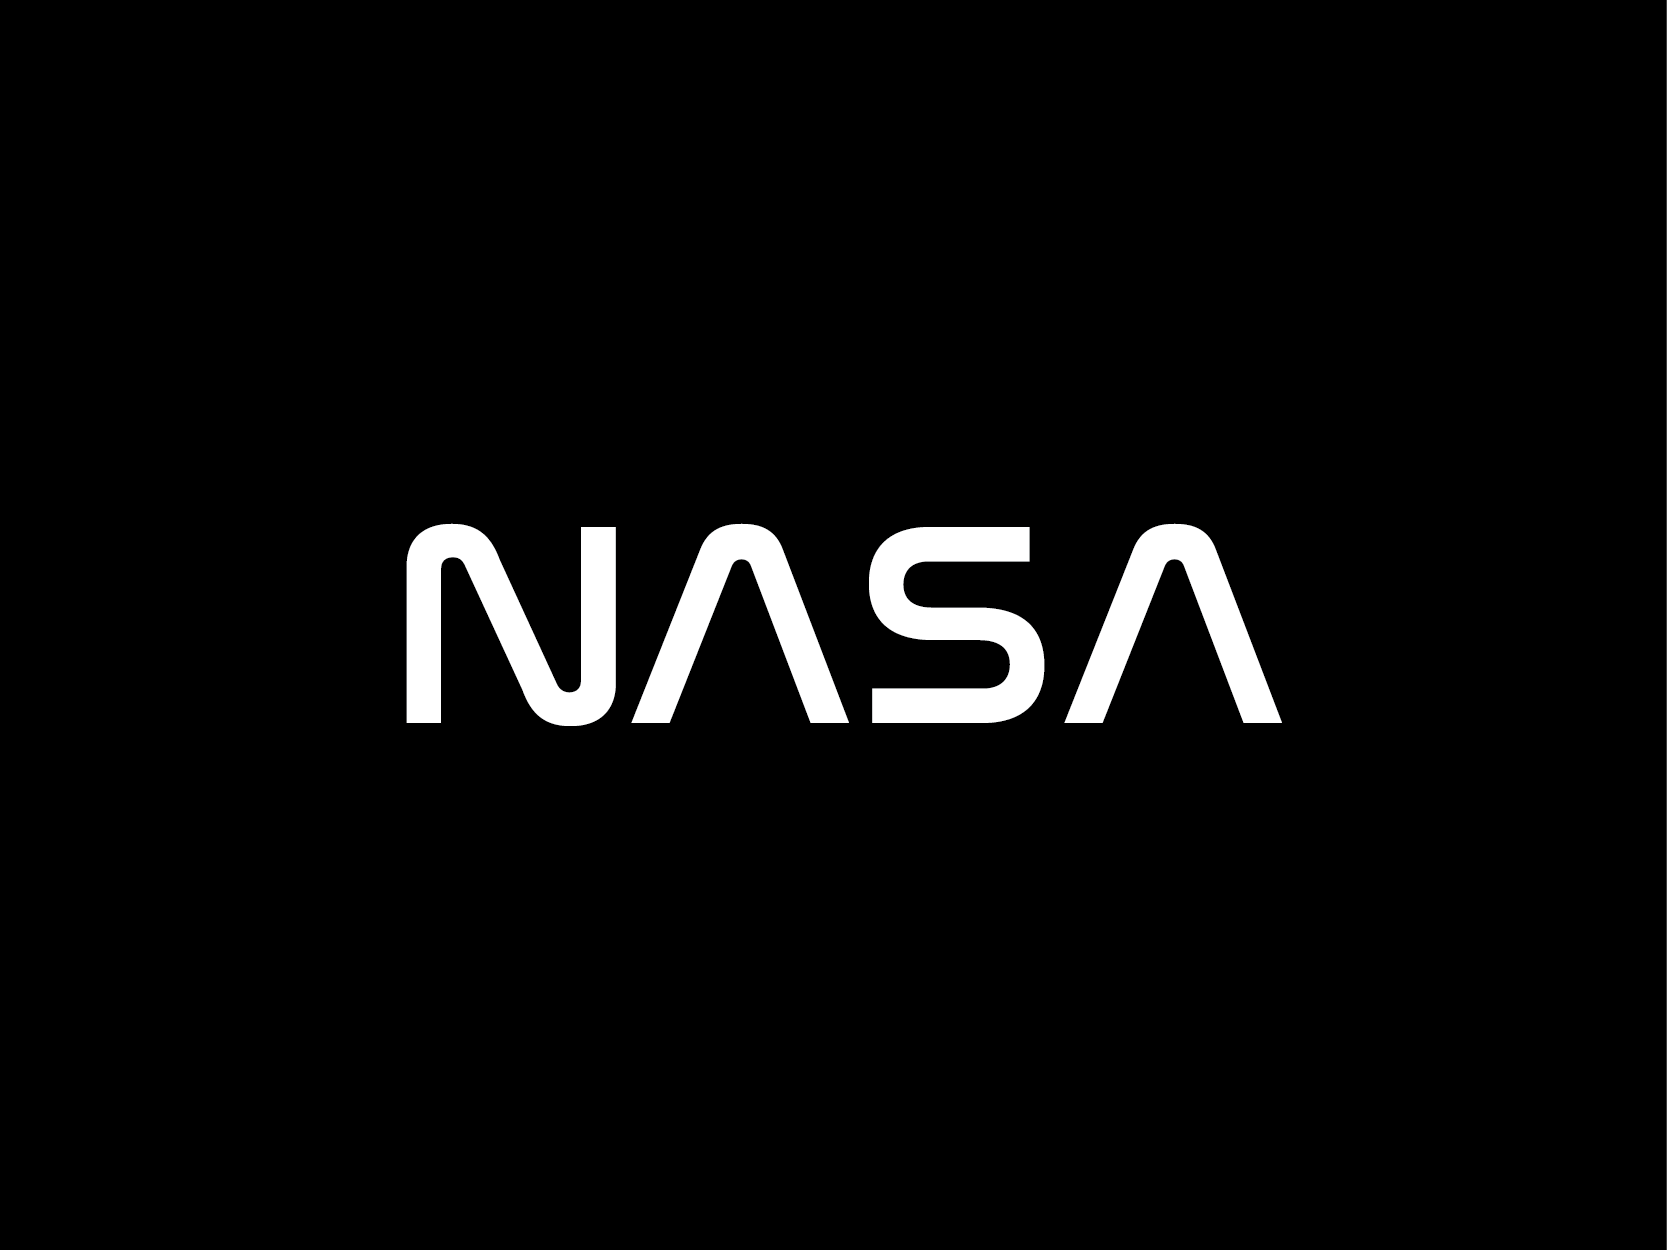 NASA logo_icon by IcyTea on Dribbble